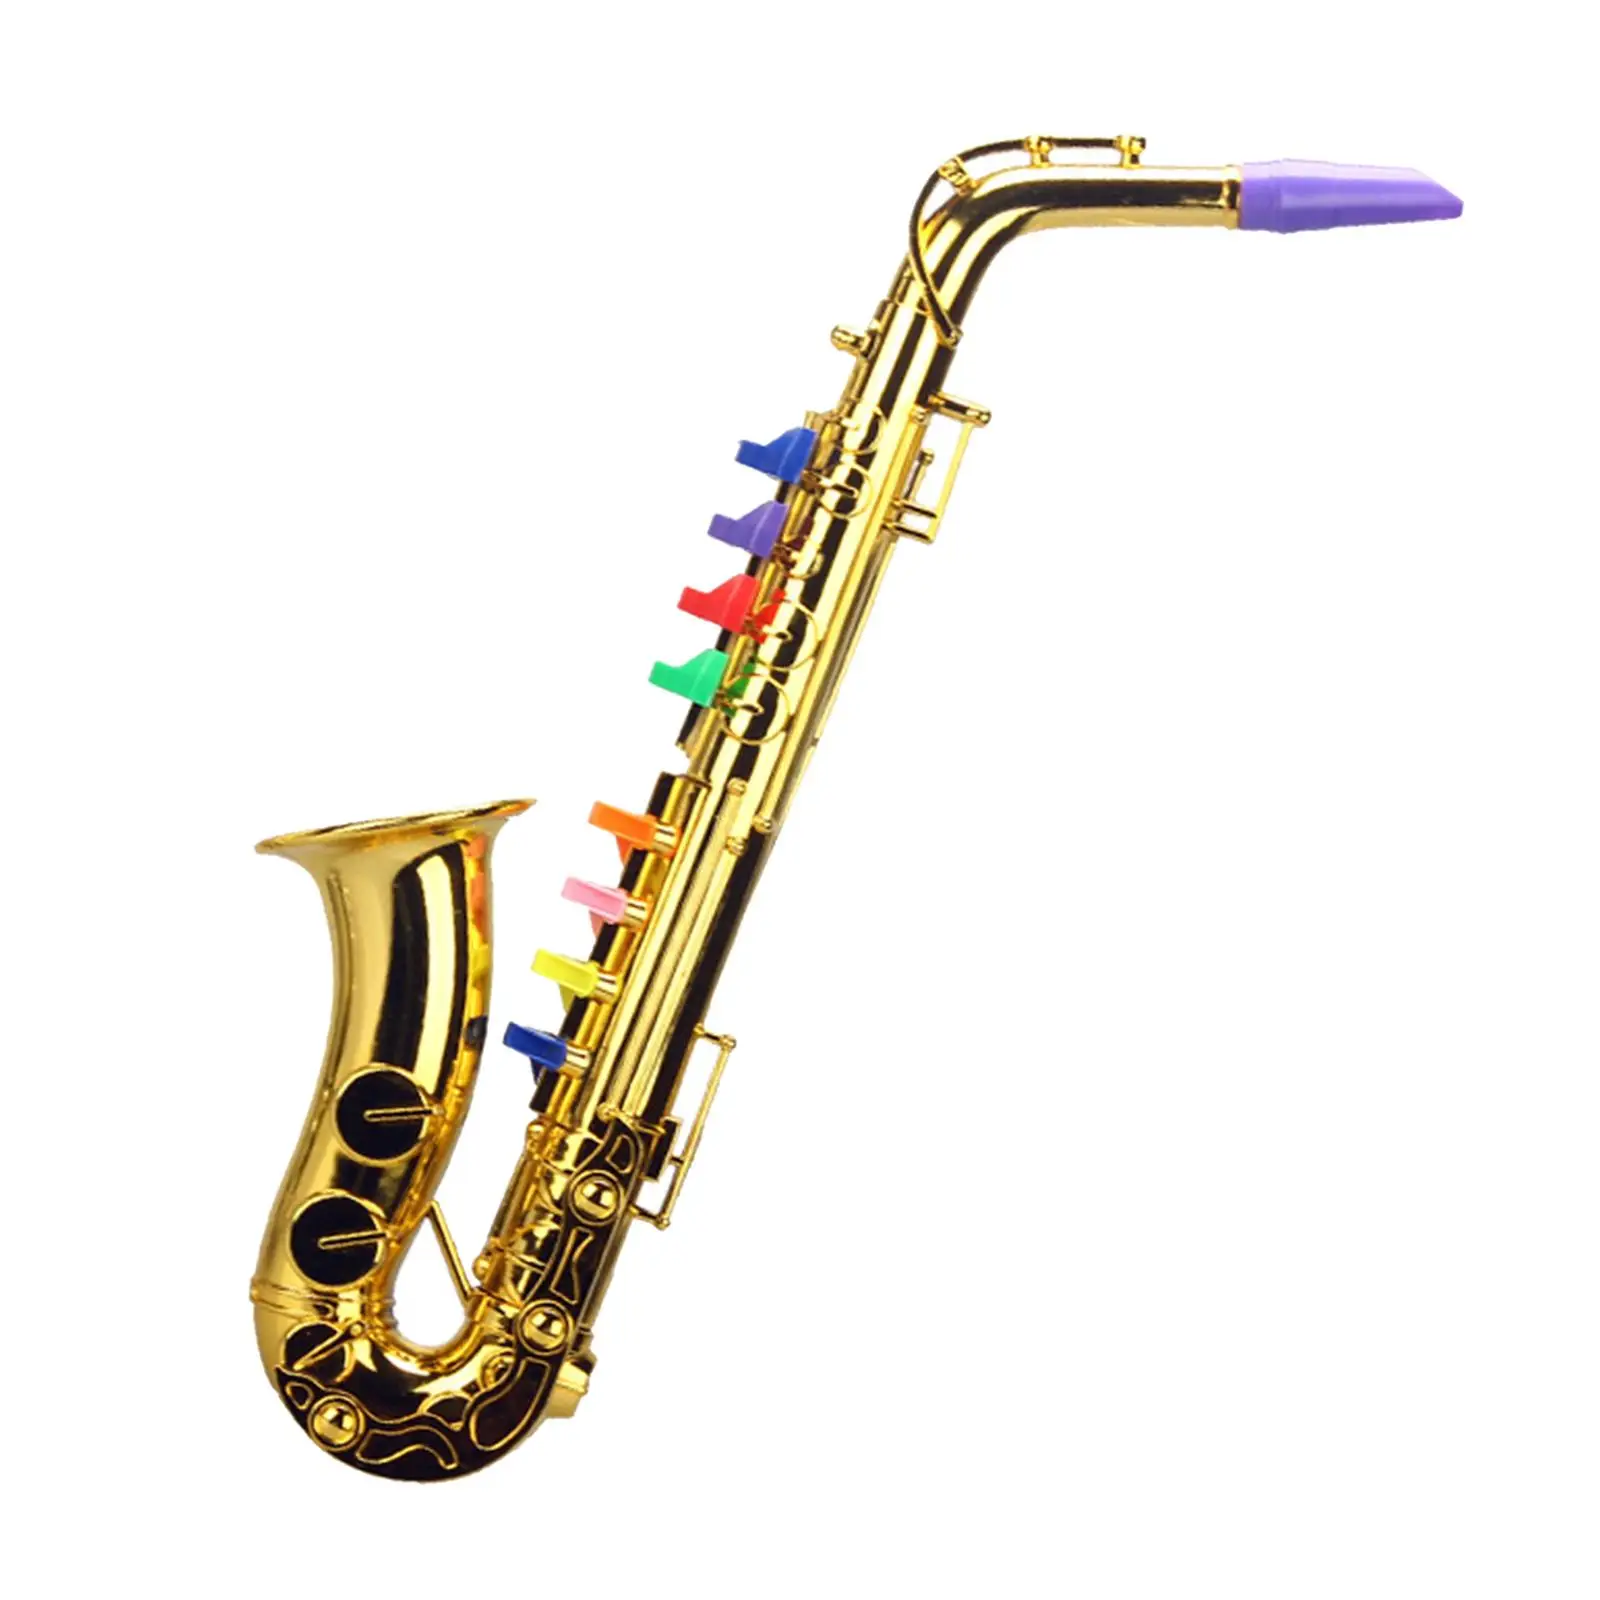 Musical Props Saxophone Instrument for Gifts Preschool Boys Girls